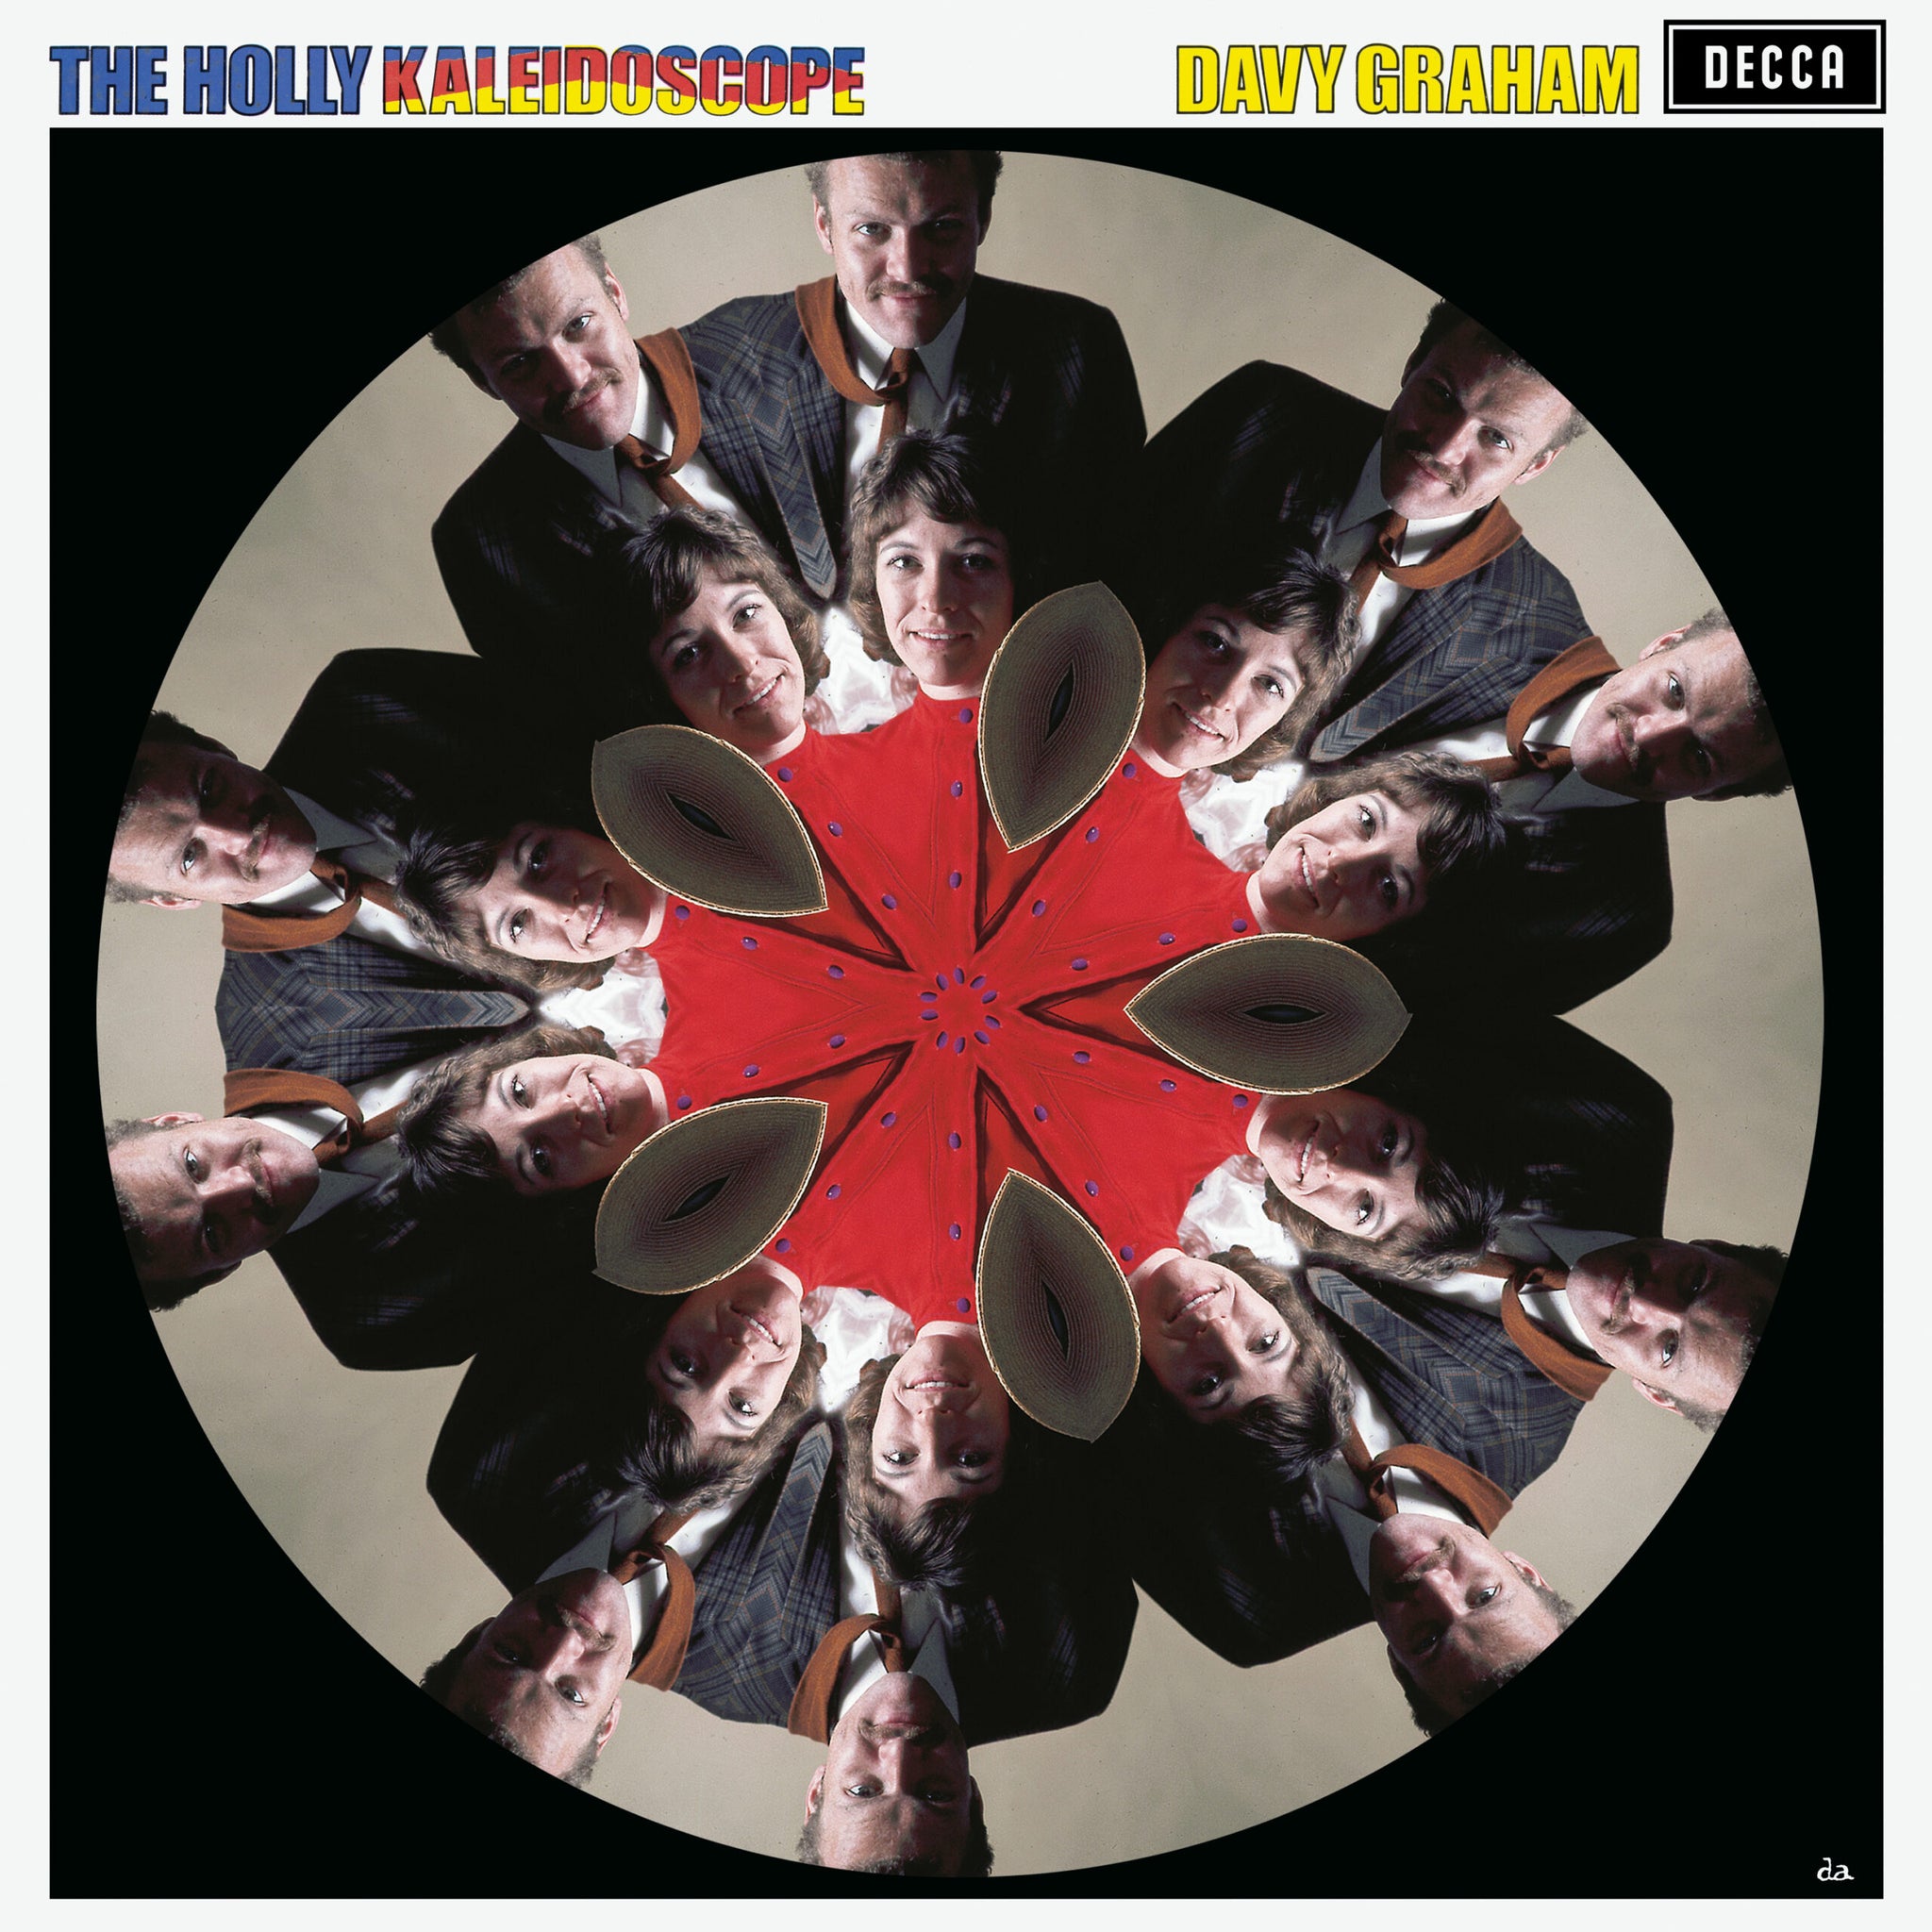 DAVY GRAHAM - The Holly Kaleidoscope - LP Limited Kaleidoscope Paddle Vinyl [RSD2020-AUG29]